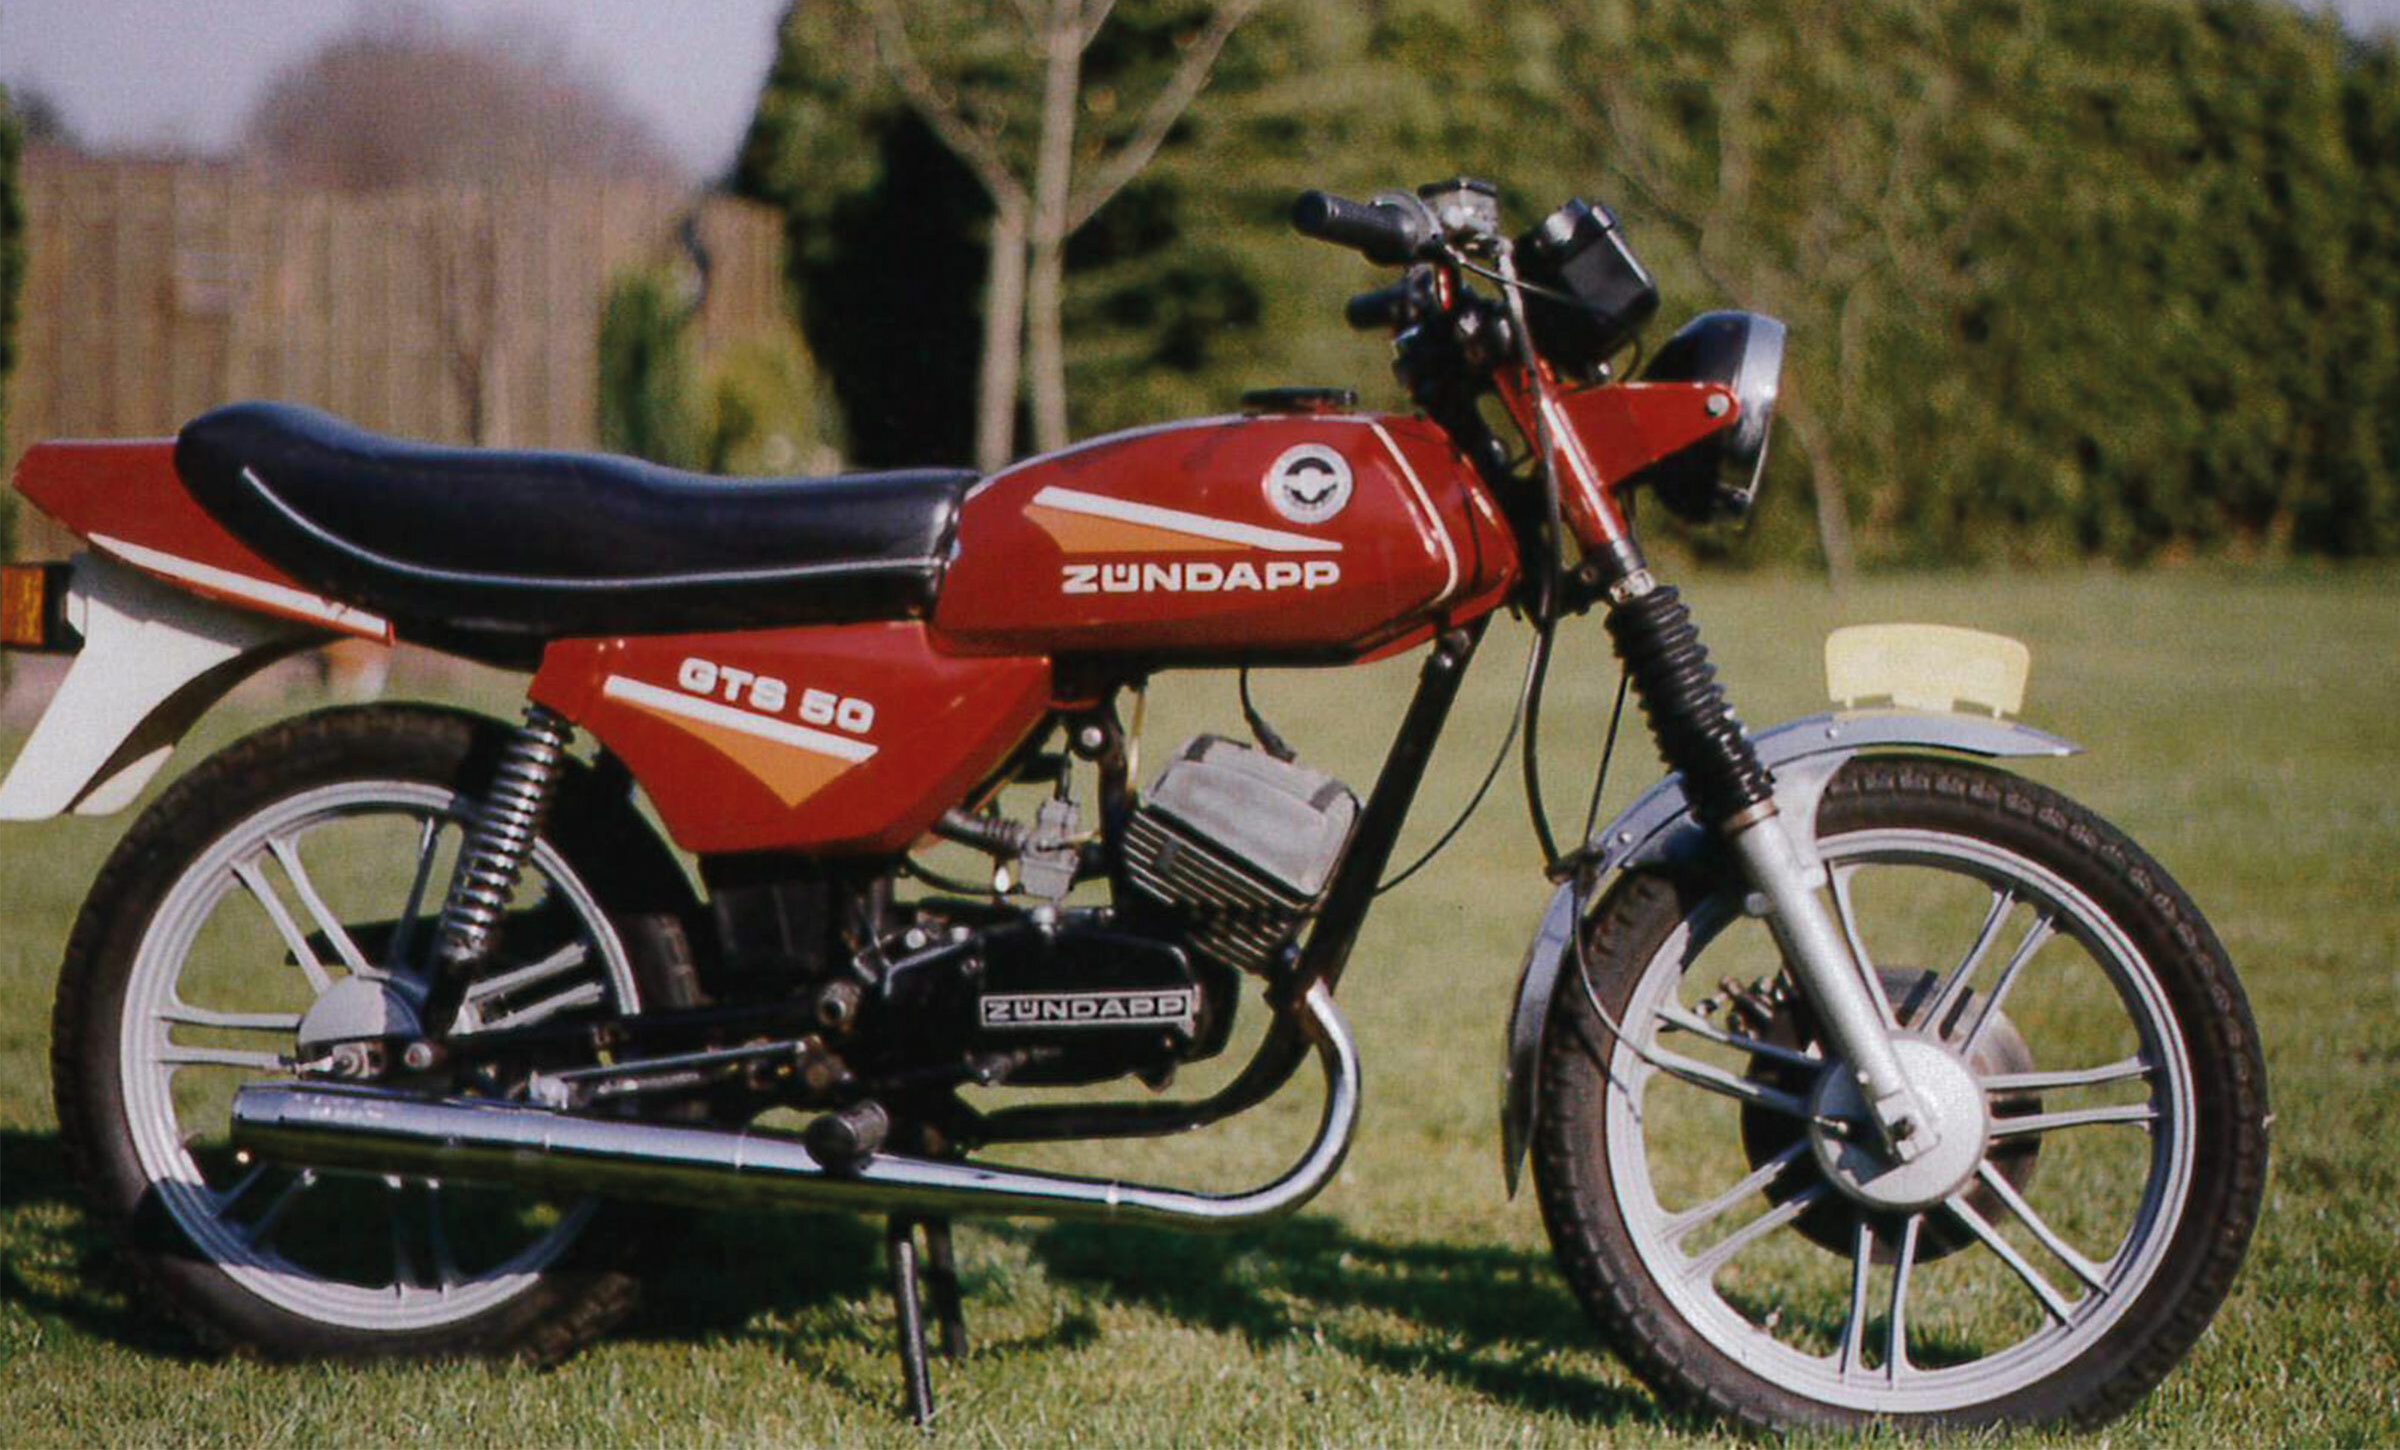 Zundapp gts50 1980 1